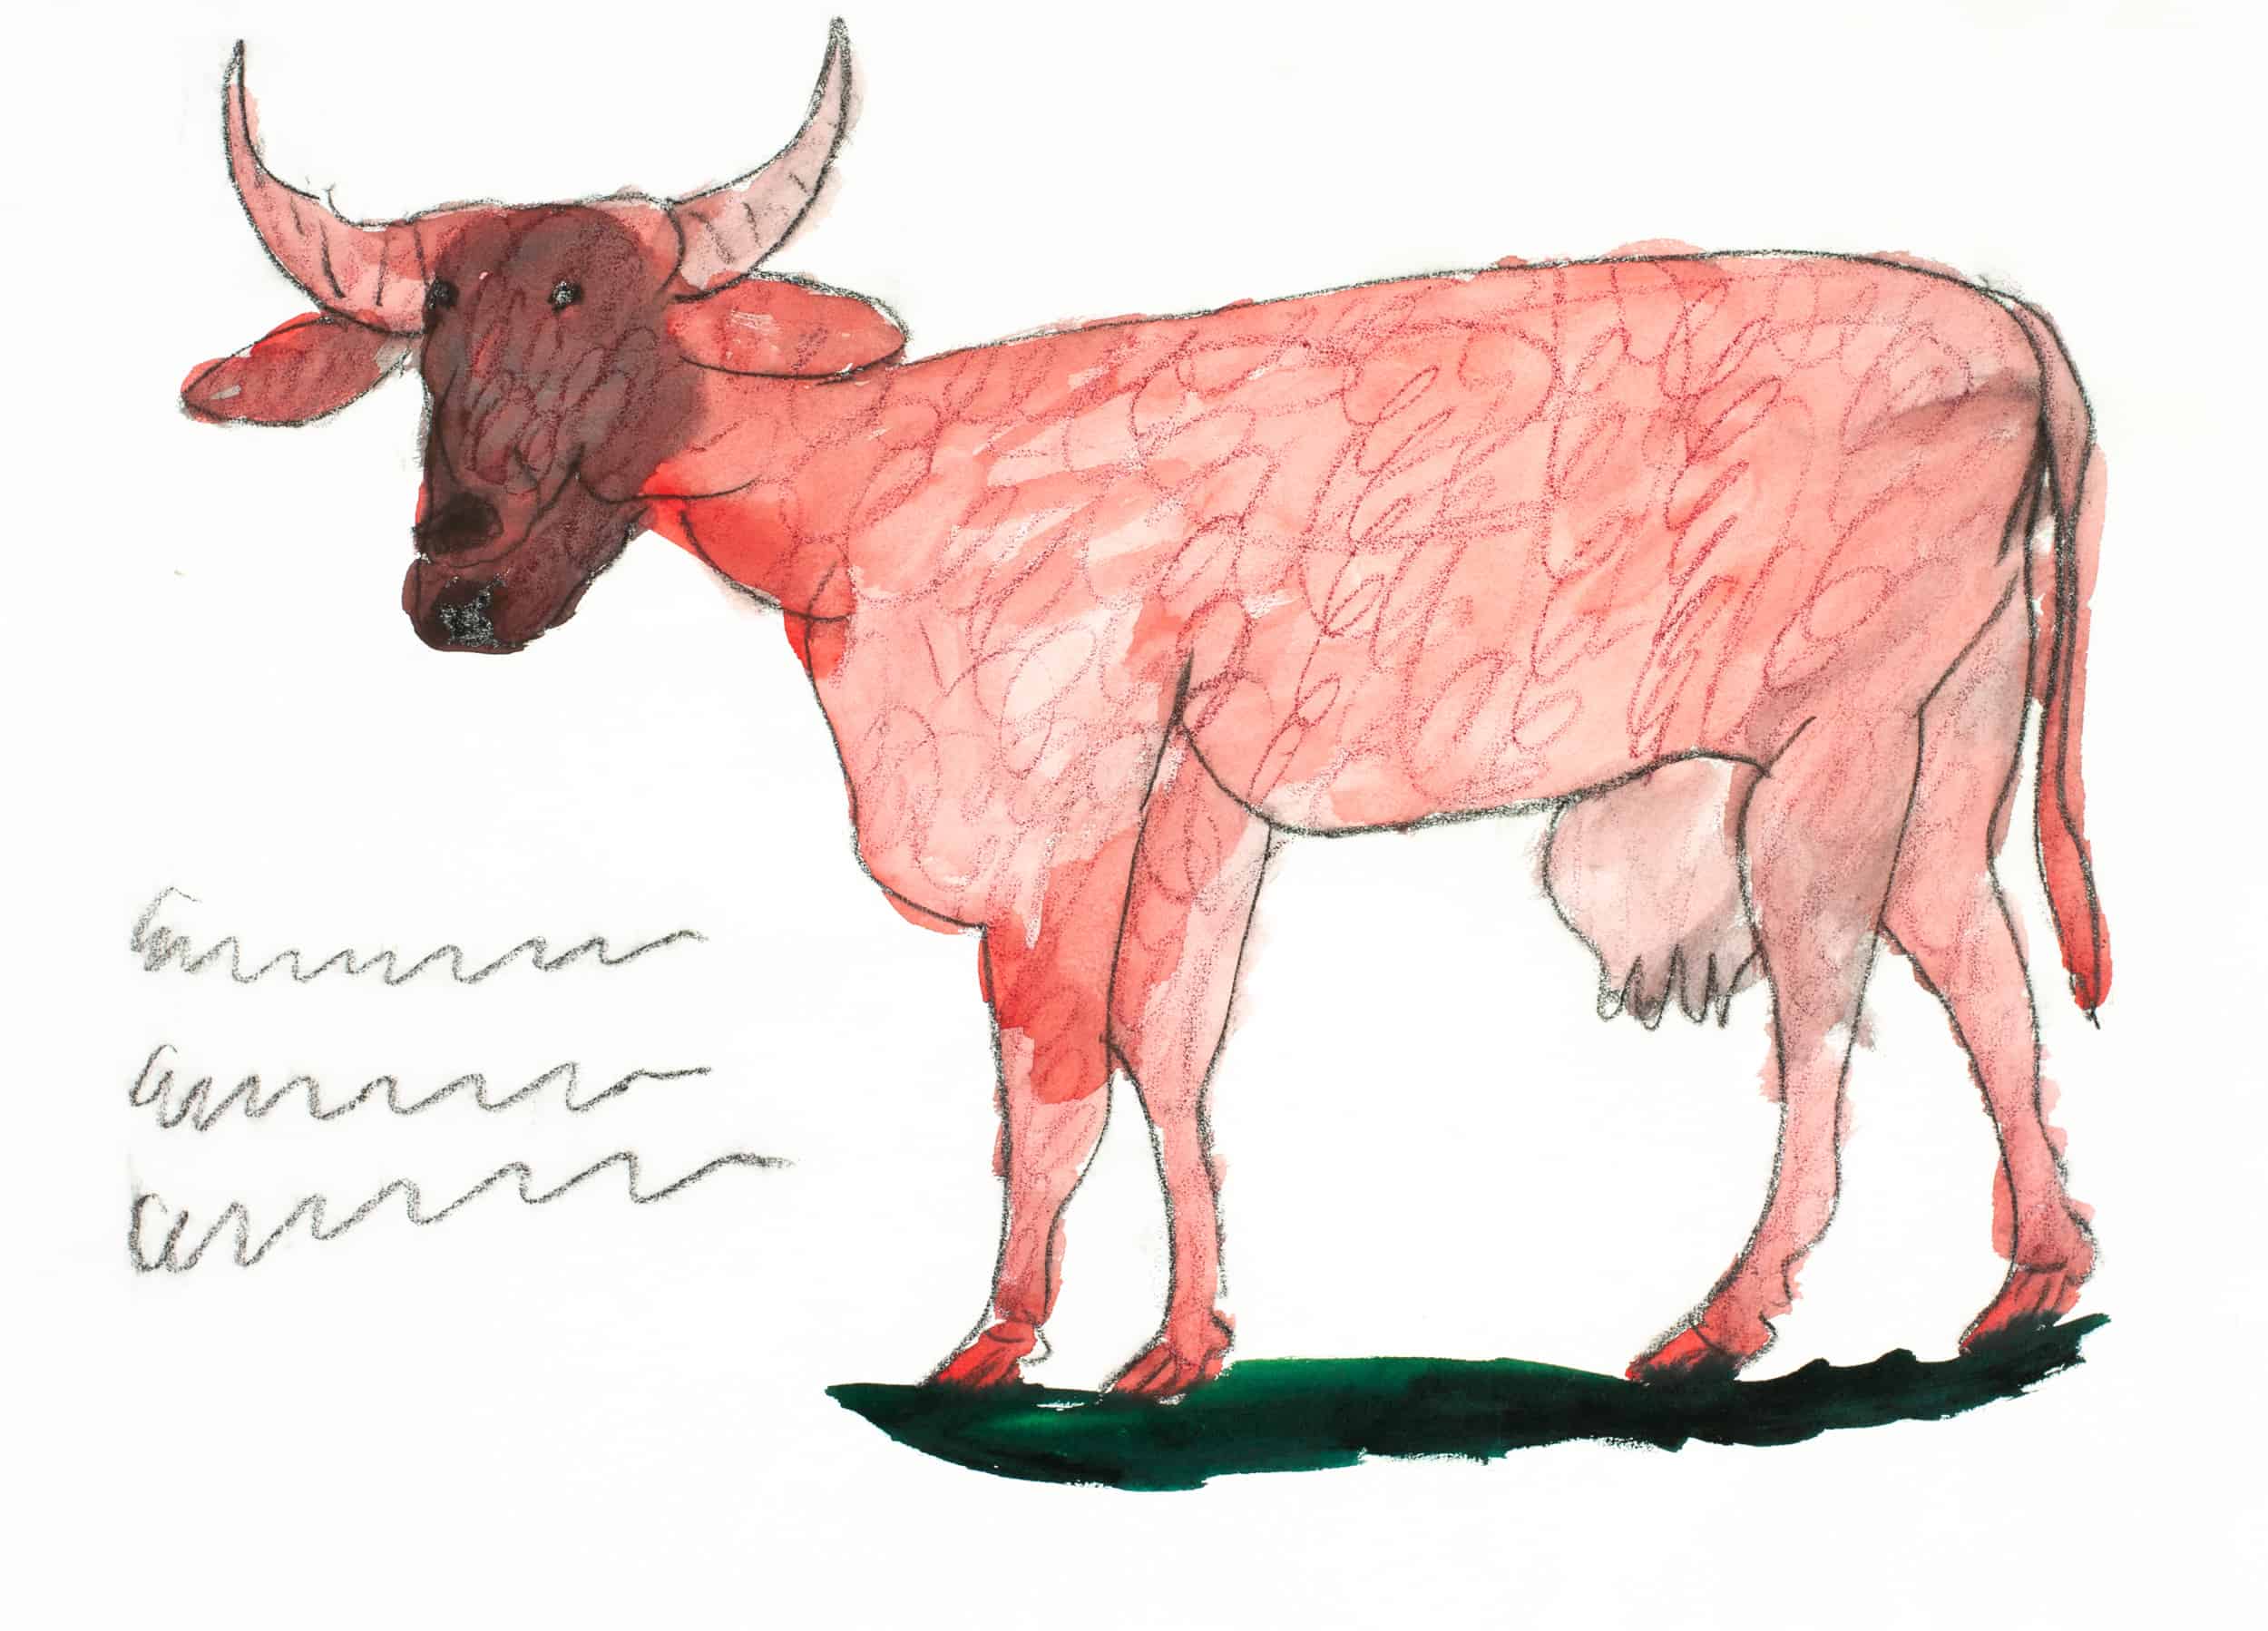 kamlander franz - Kuh / Cow